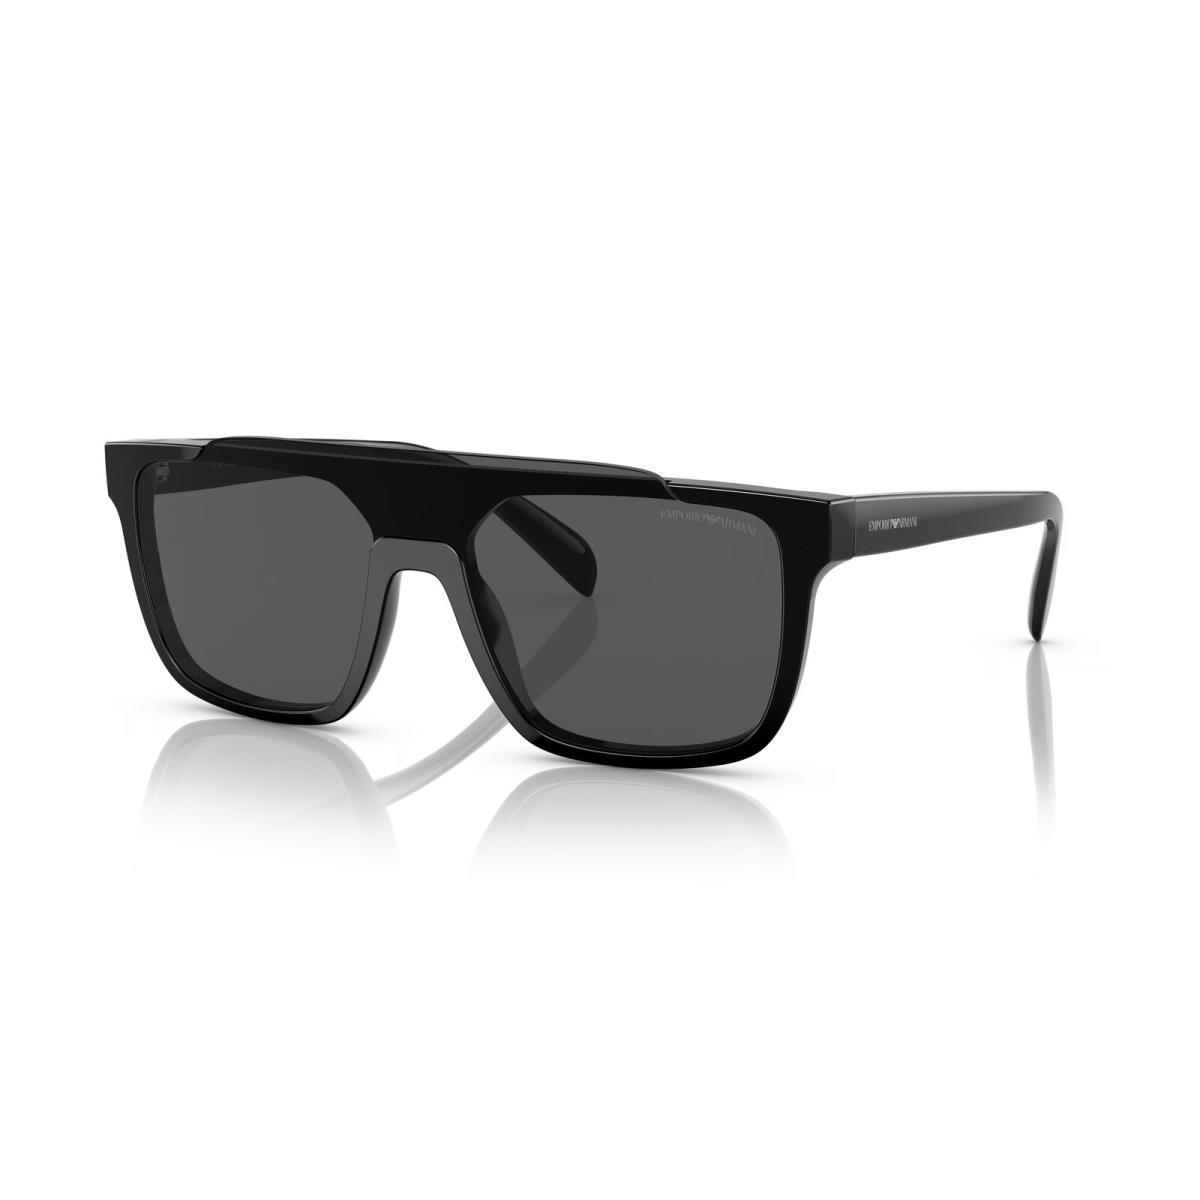 Emporio Armani 0EA4193 501787 Shiny Black Rectangle Sunglasses